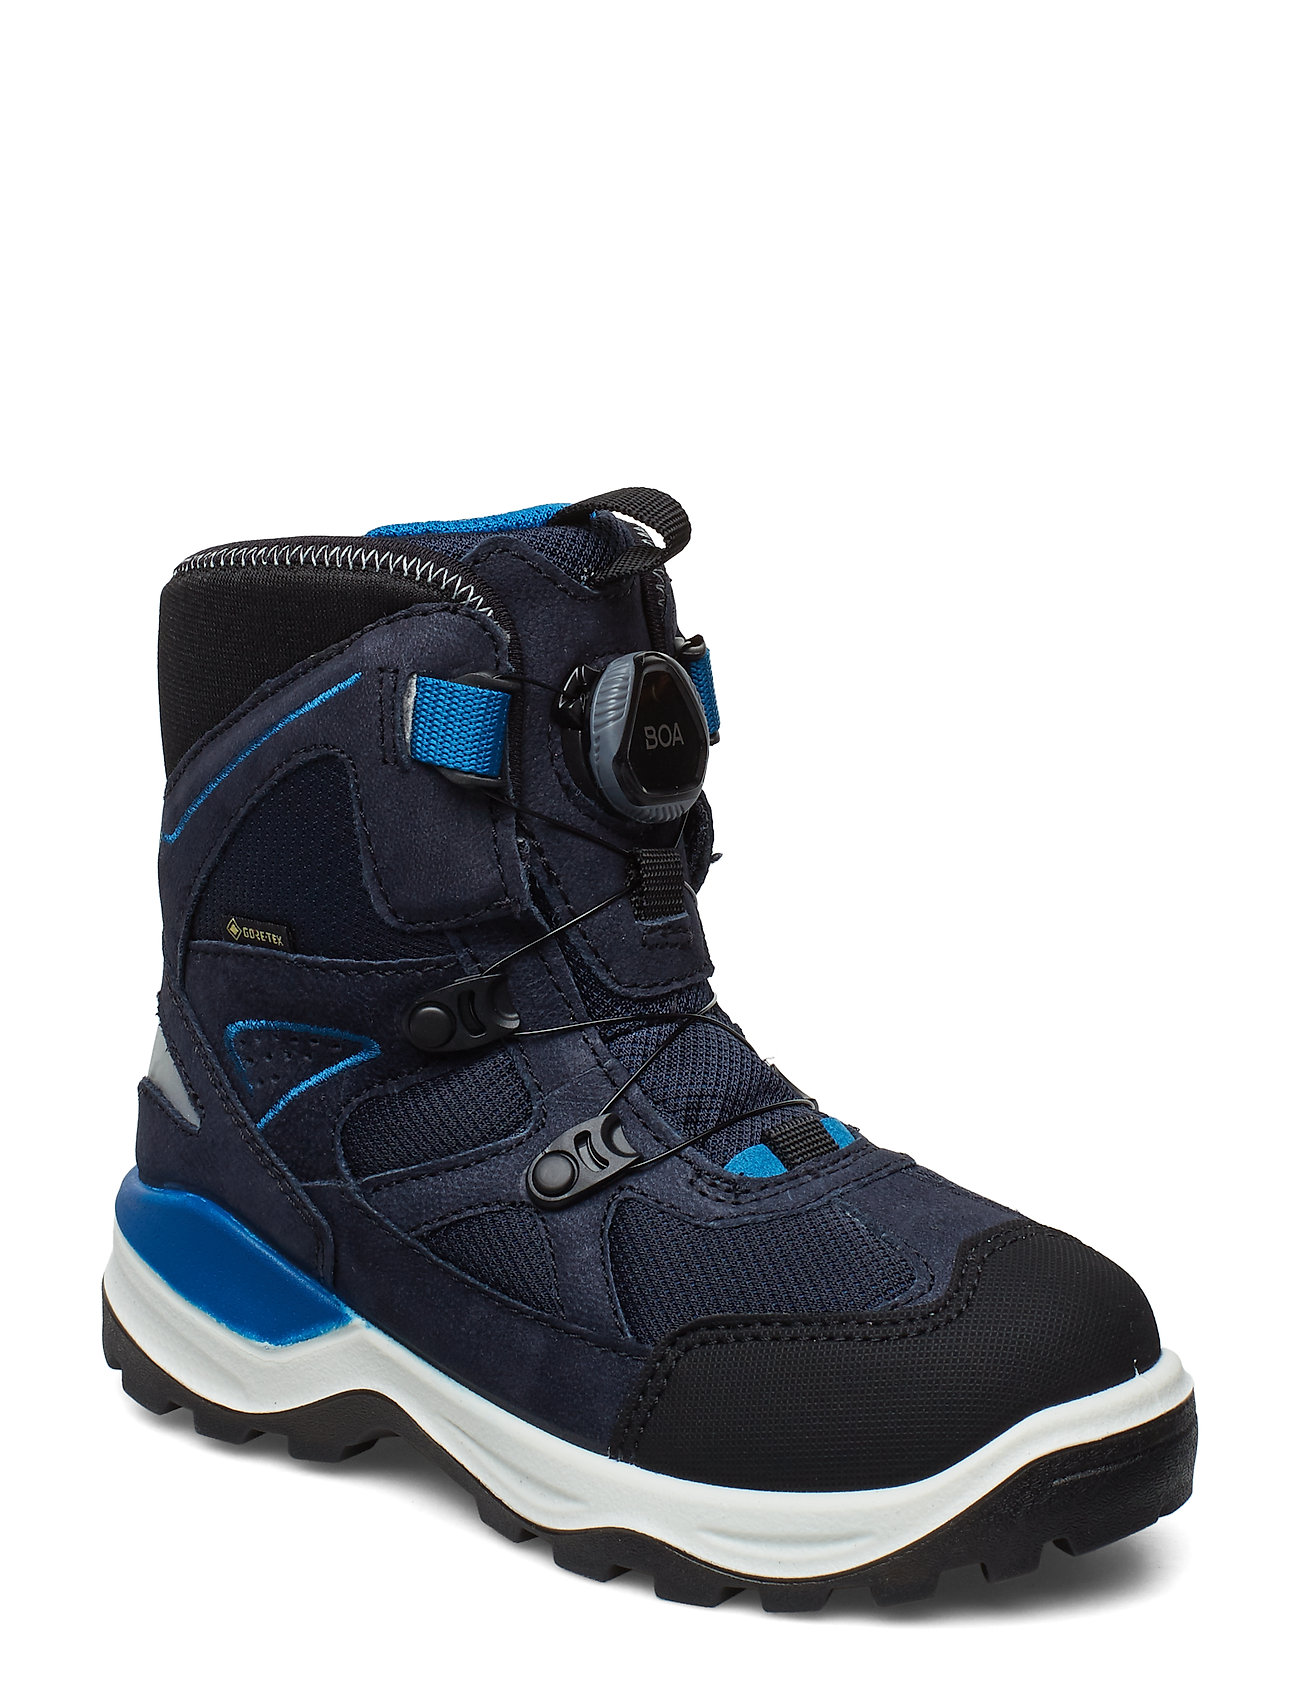 Snow Mountain - Boots - Boozt.com